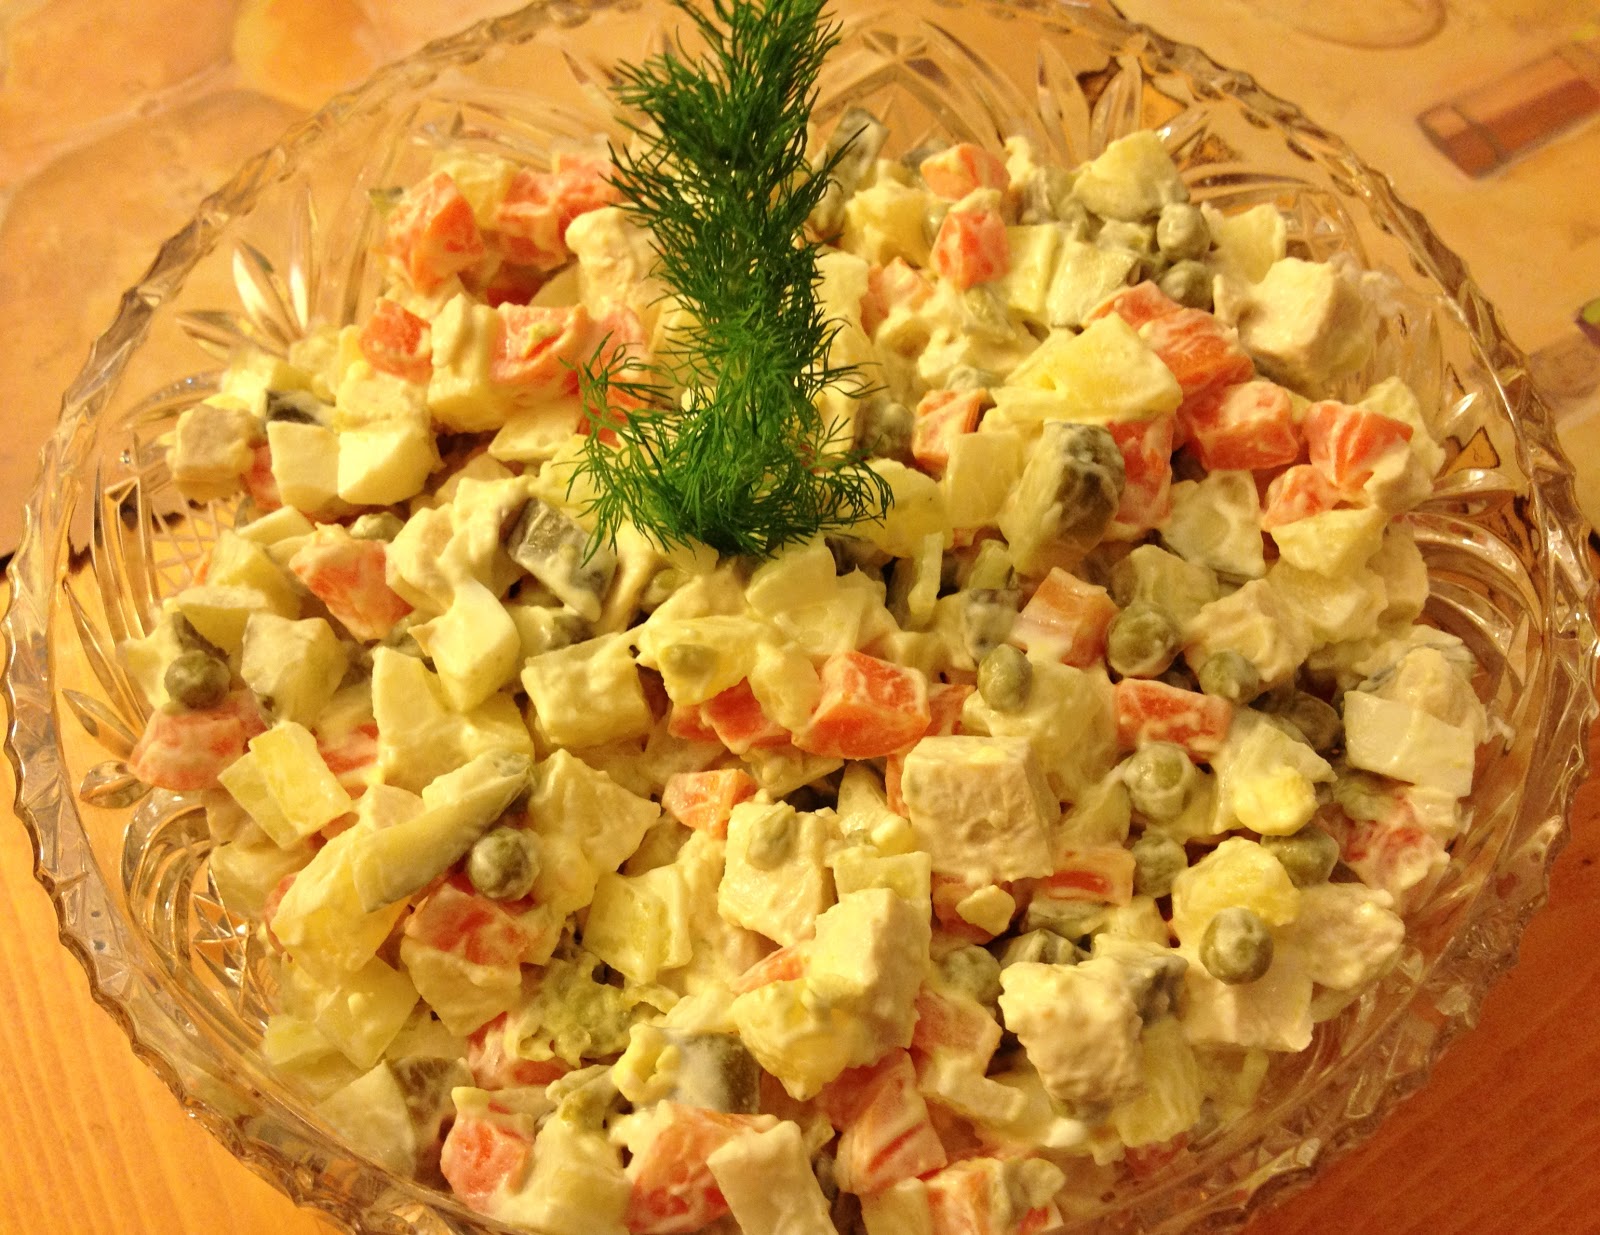 Russian Salad “Olivye”